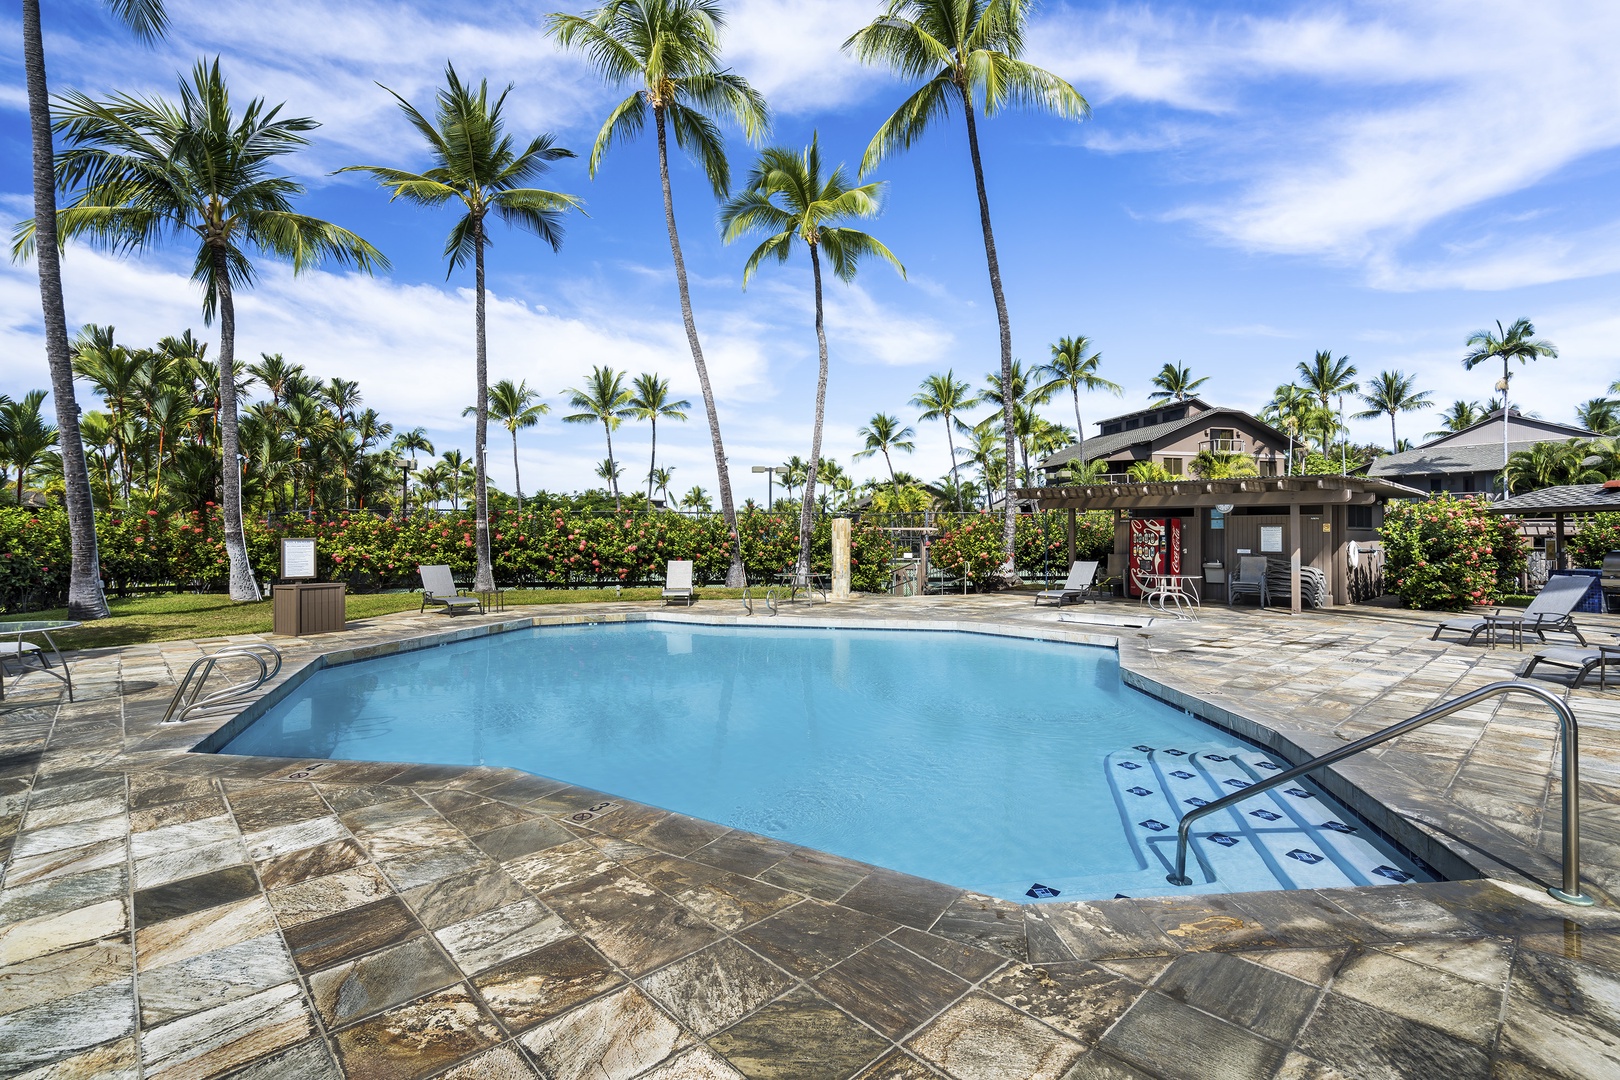 Kailua Kona Vacation Rentals, Kanaloa at Kona 1302 - Take a dip in the shared pool